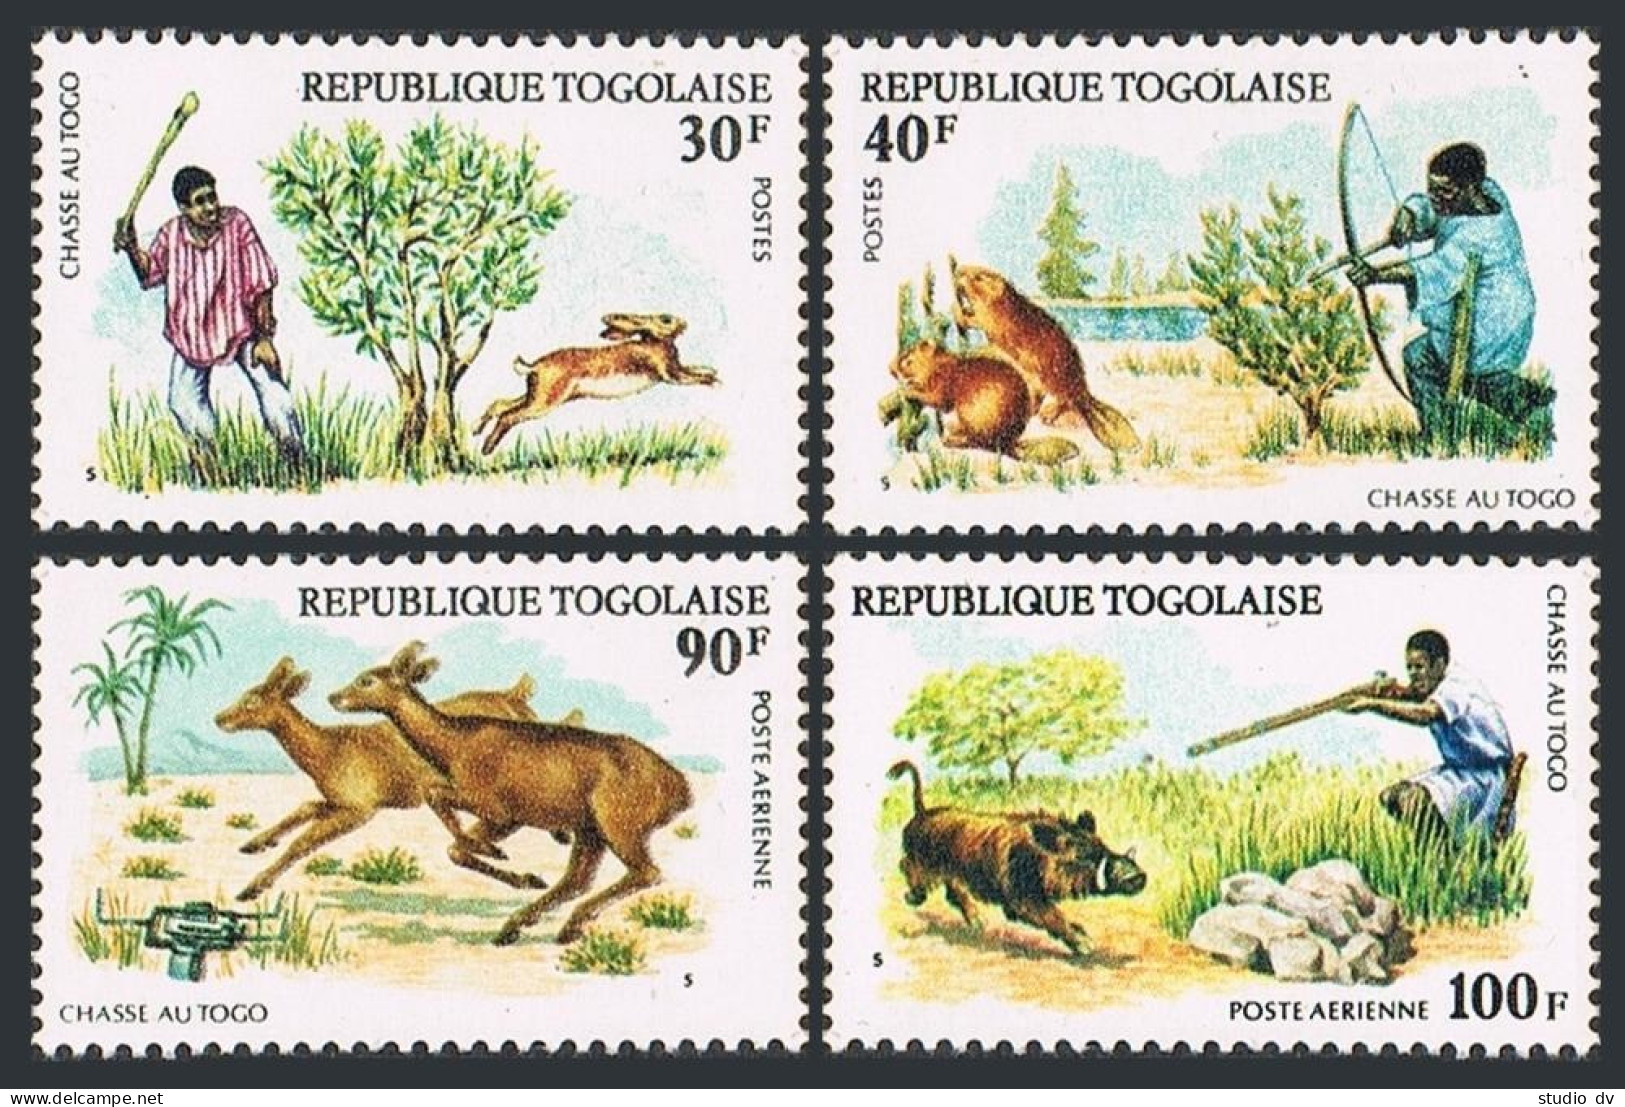 Togo 909-910,C250-C251,MNH.Mi 1102-1105. Hunting,1975.Hunters,Rabbit,Beaver,Deer - Togo (1960-...)